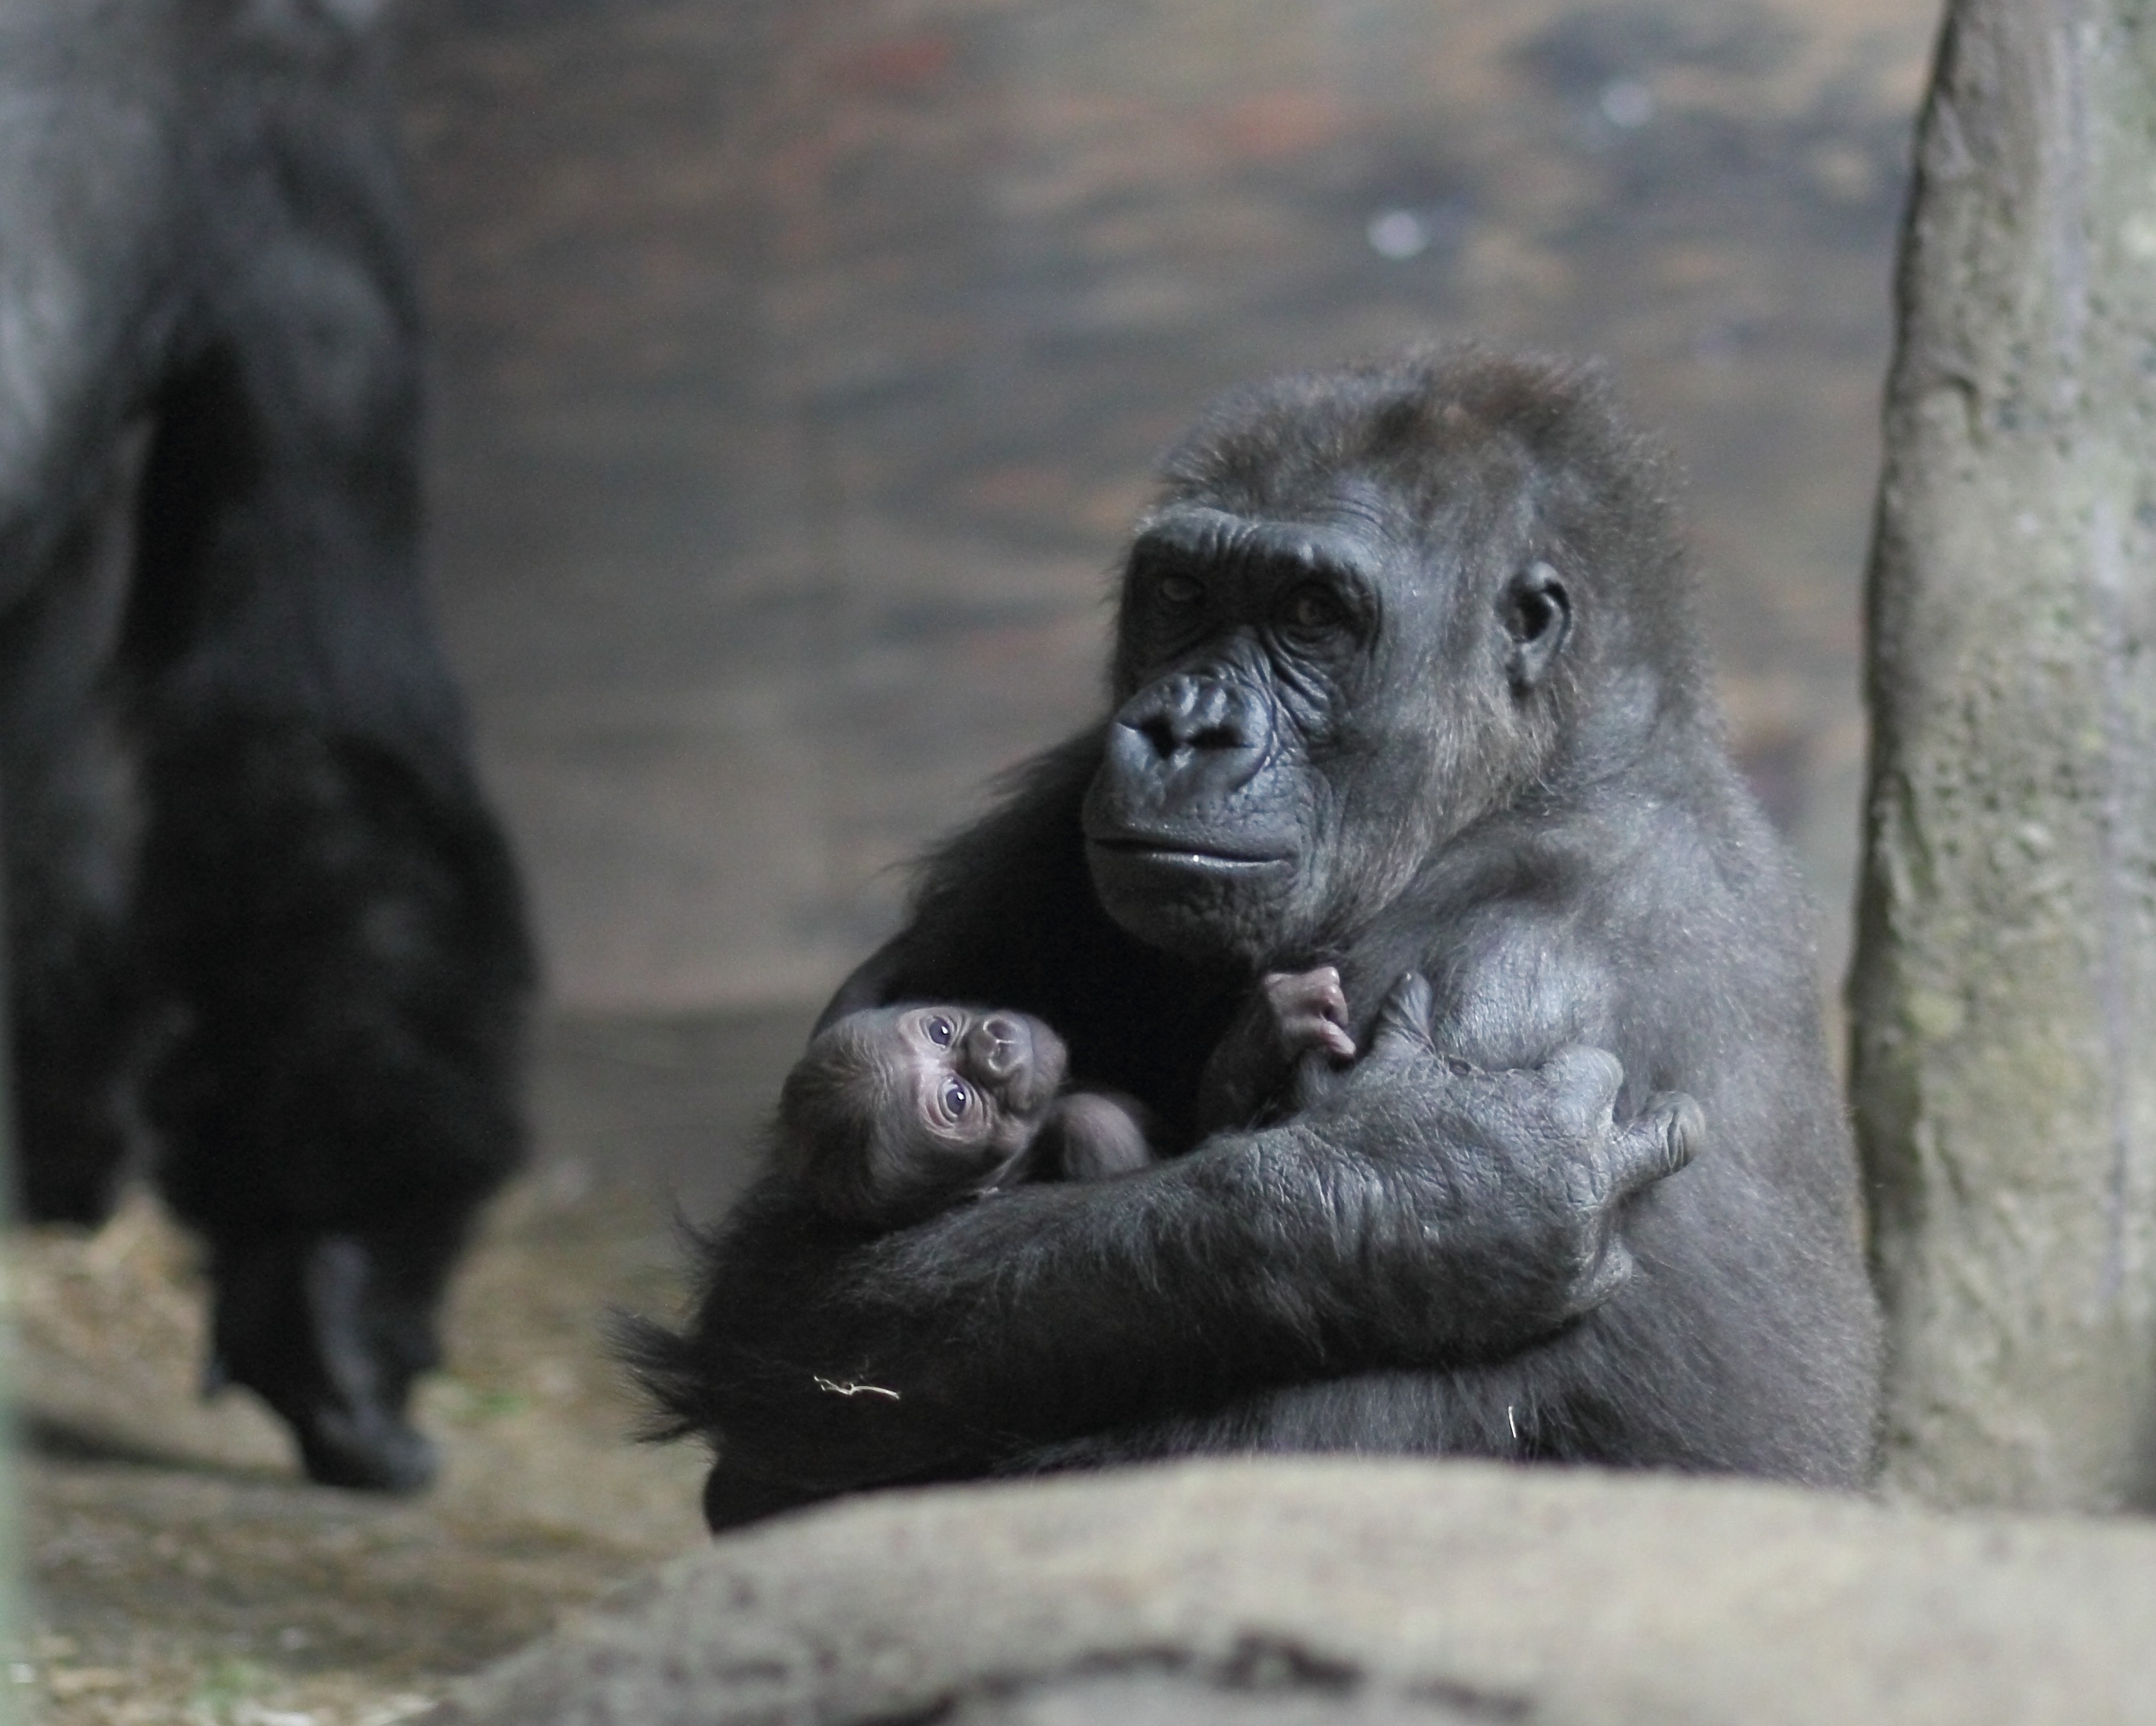 A Baby Gorilla